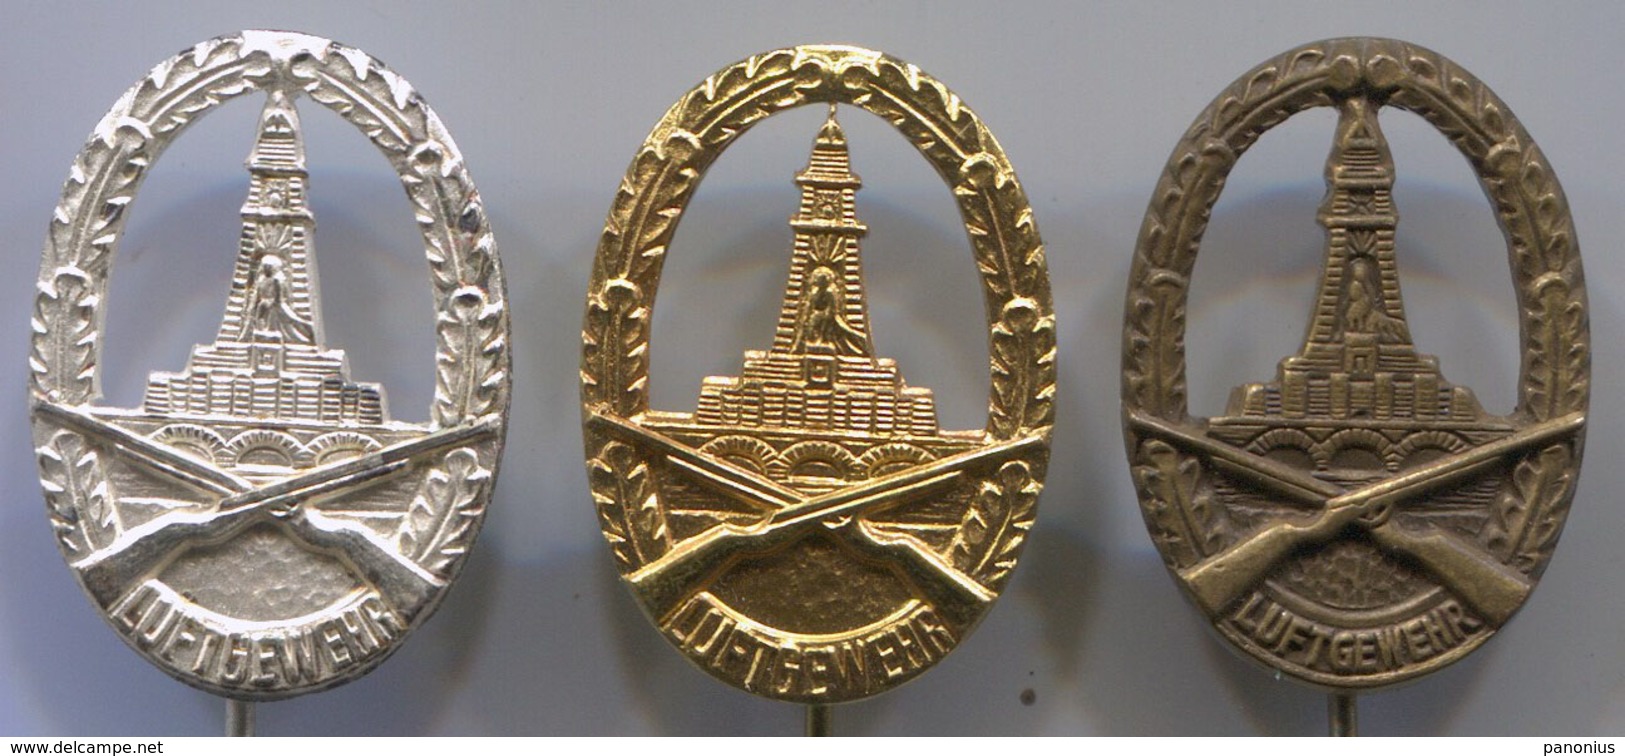 ARCHERY / SHOOTING - LUFTGEWEHR, Germany, Vintage Pin, Badge, Abzeichen, 3 Pieces - Tir à L'Arc